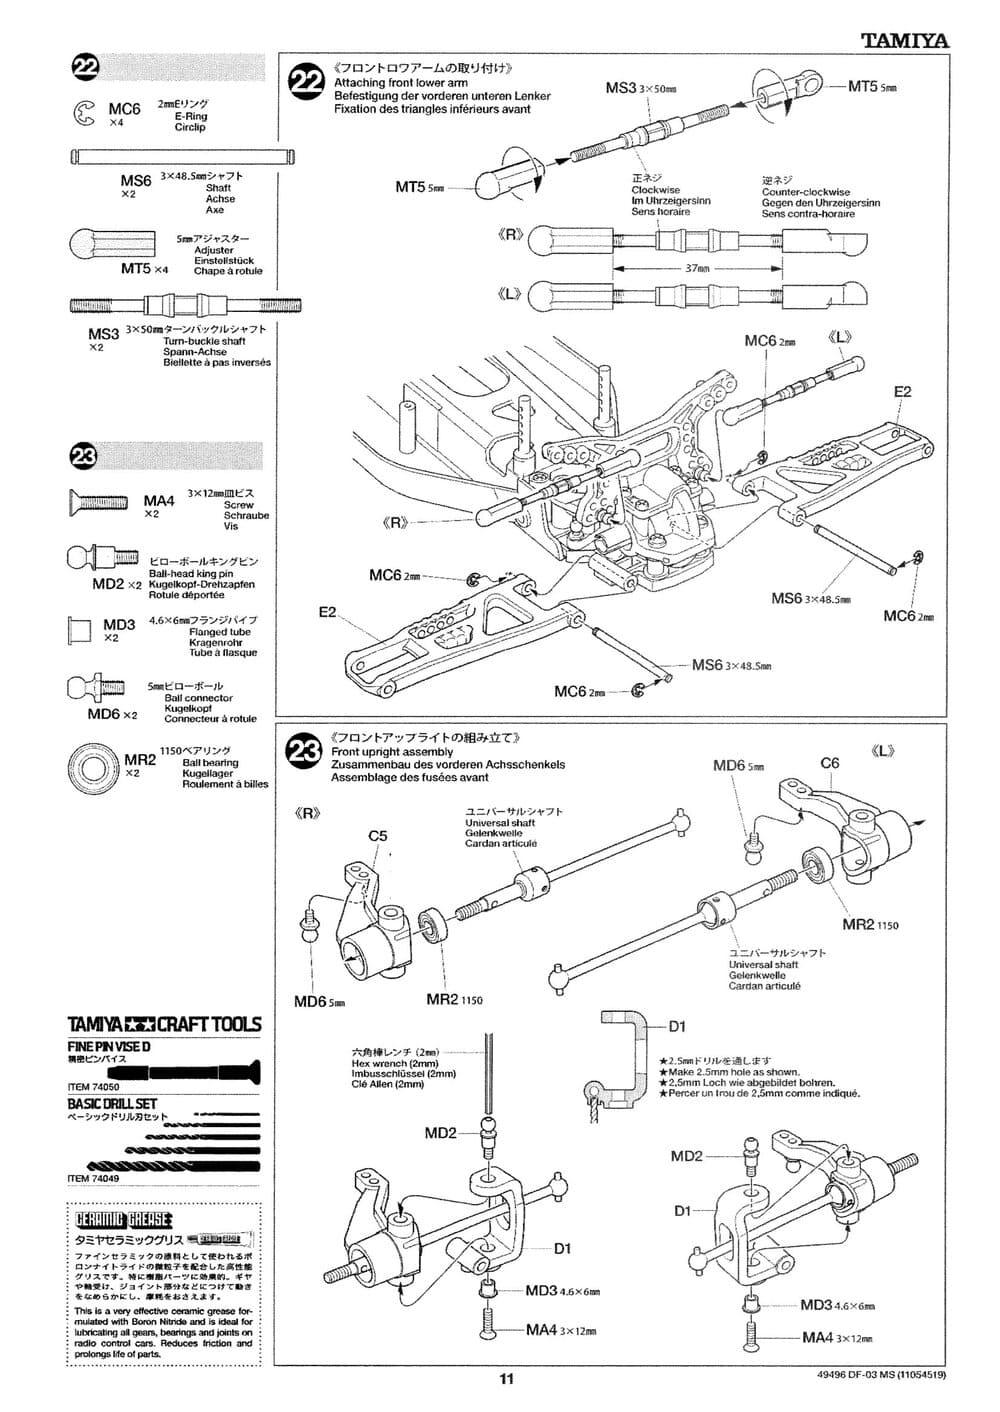 Tamiya - DF-03 MS Chassis Chassis - Manual - Page 11